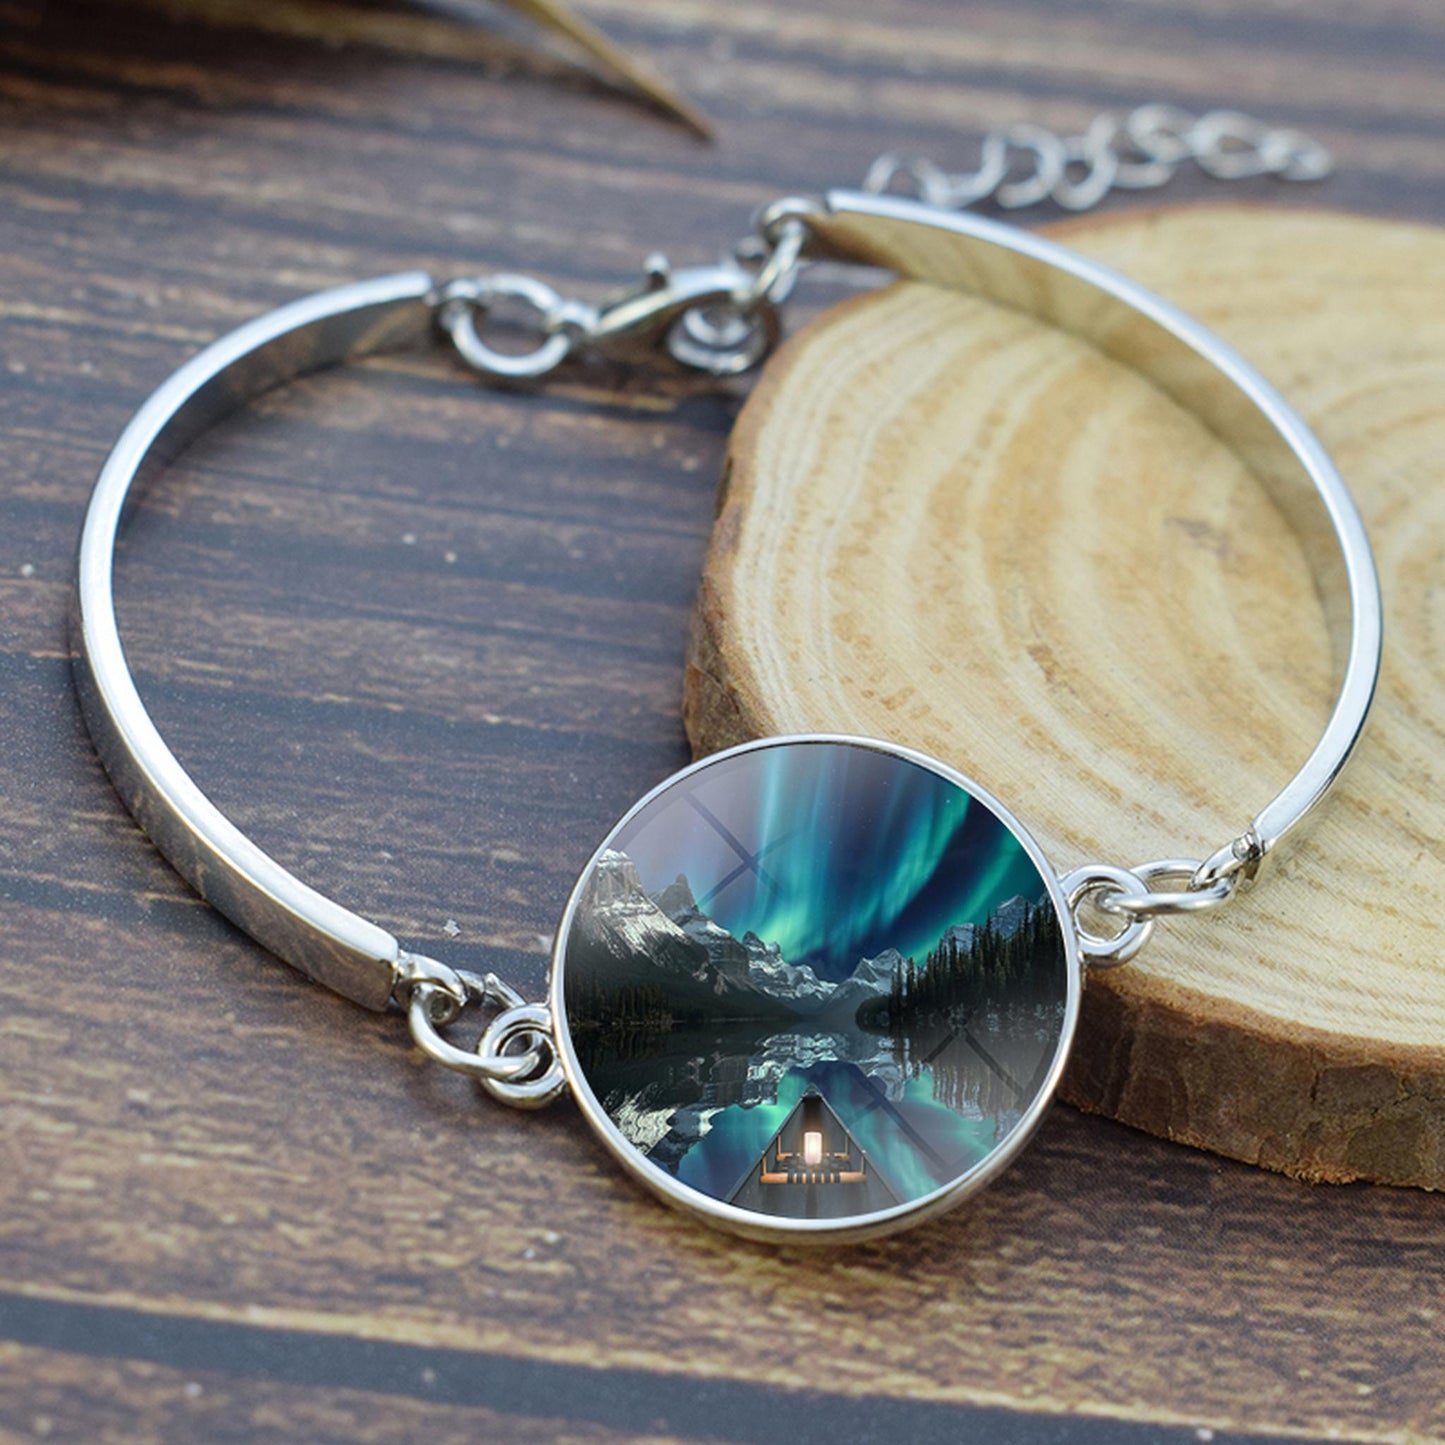 Unique Aurora Borealis Bangle Bracelet - Northern Light Jewelry - Glass Cabochon Silver Plated Bracelet - Perfect Aurora Lovers Gift 16